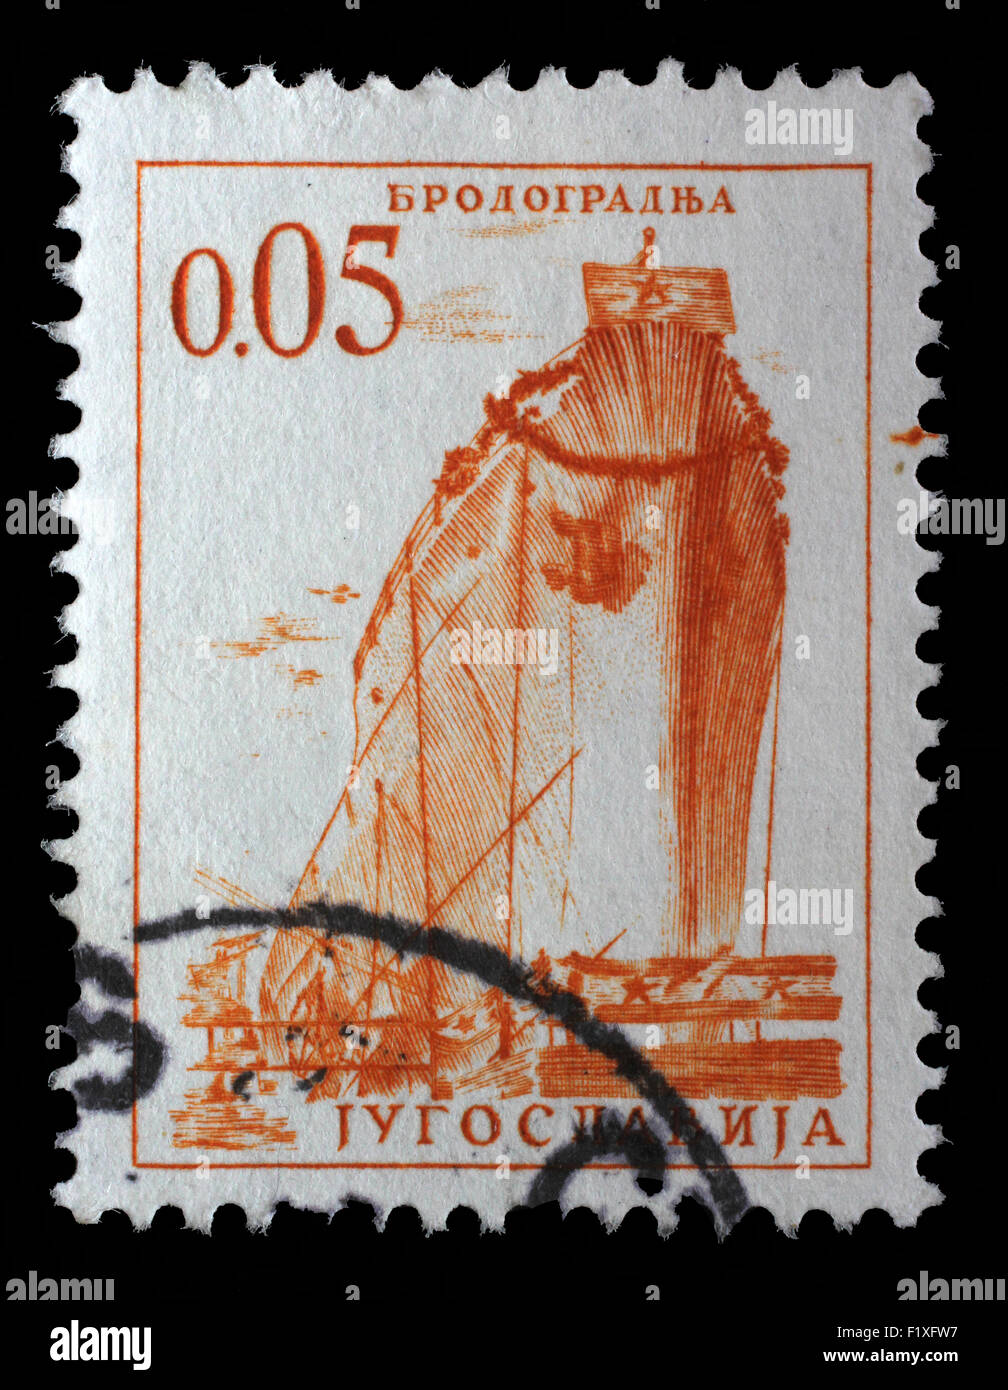 Stamp printed by Yugoslavia, shows a ship in a shipyard, series, circa 1966 Stock Photo